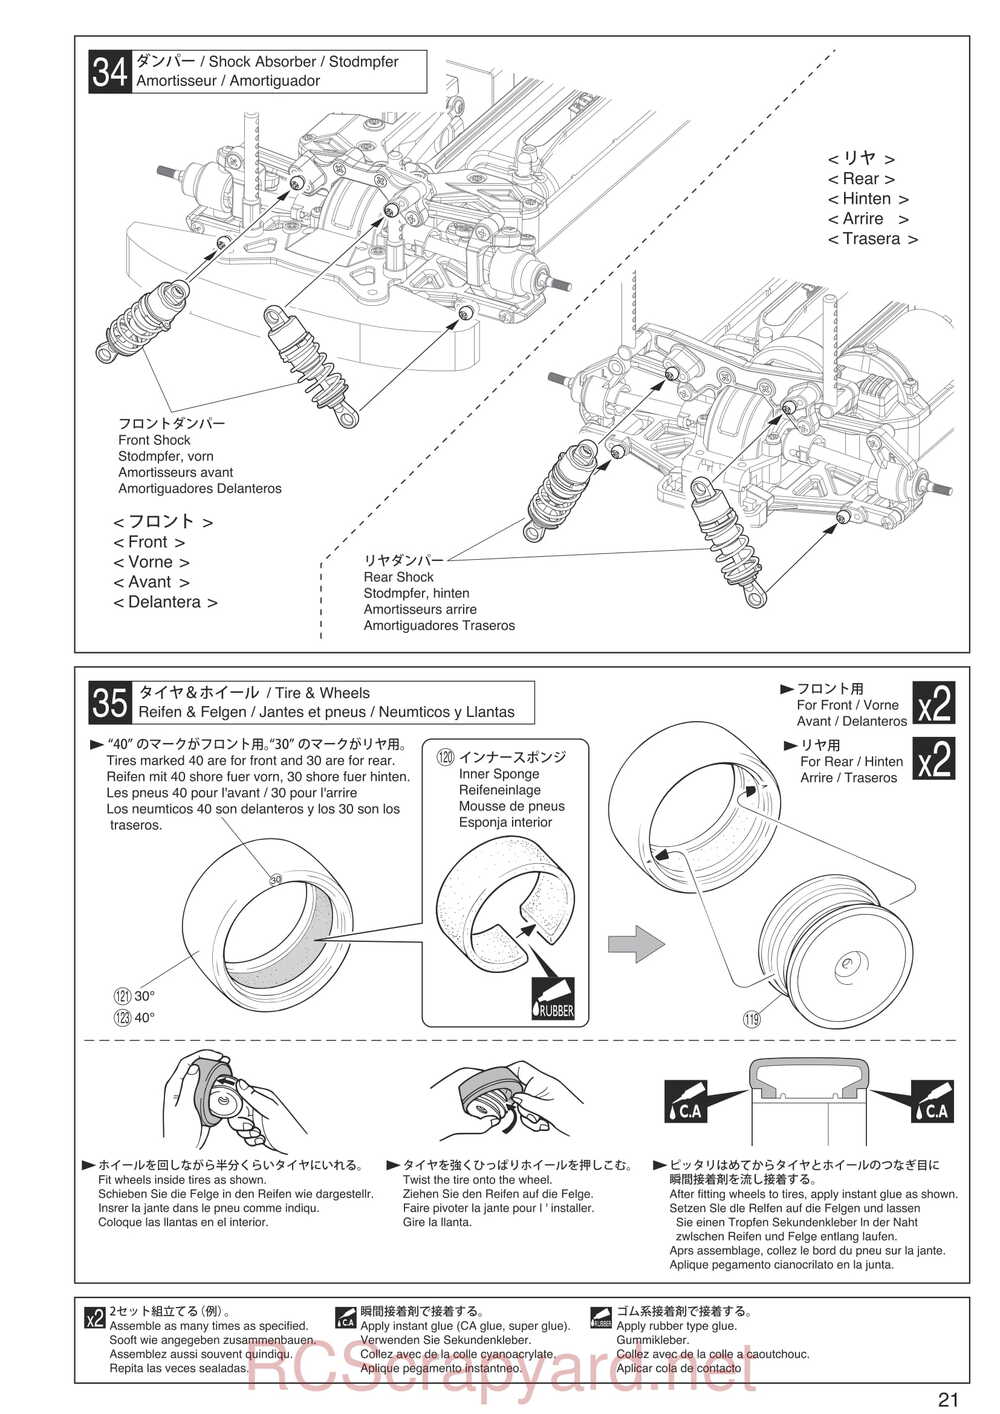 Kyosho - 30903 - EP FAZER - Manual - Page 21